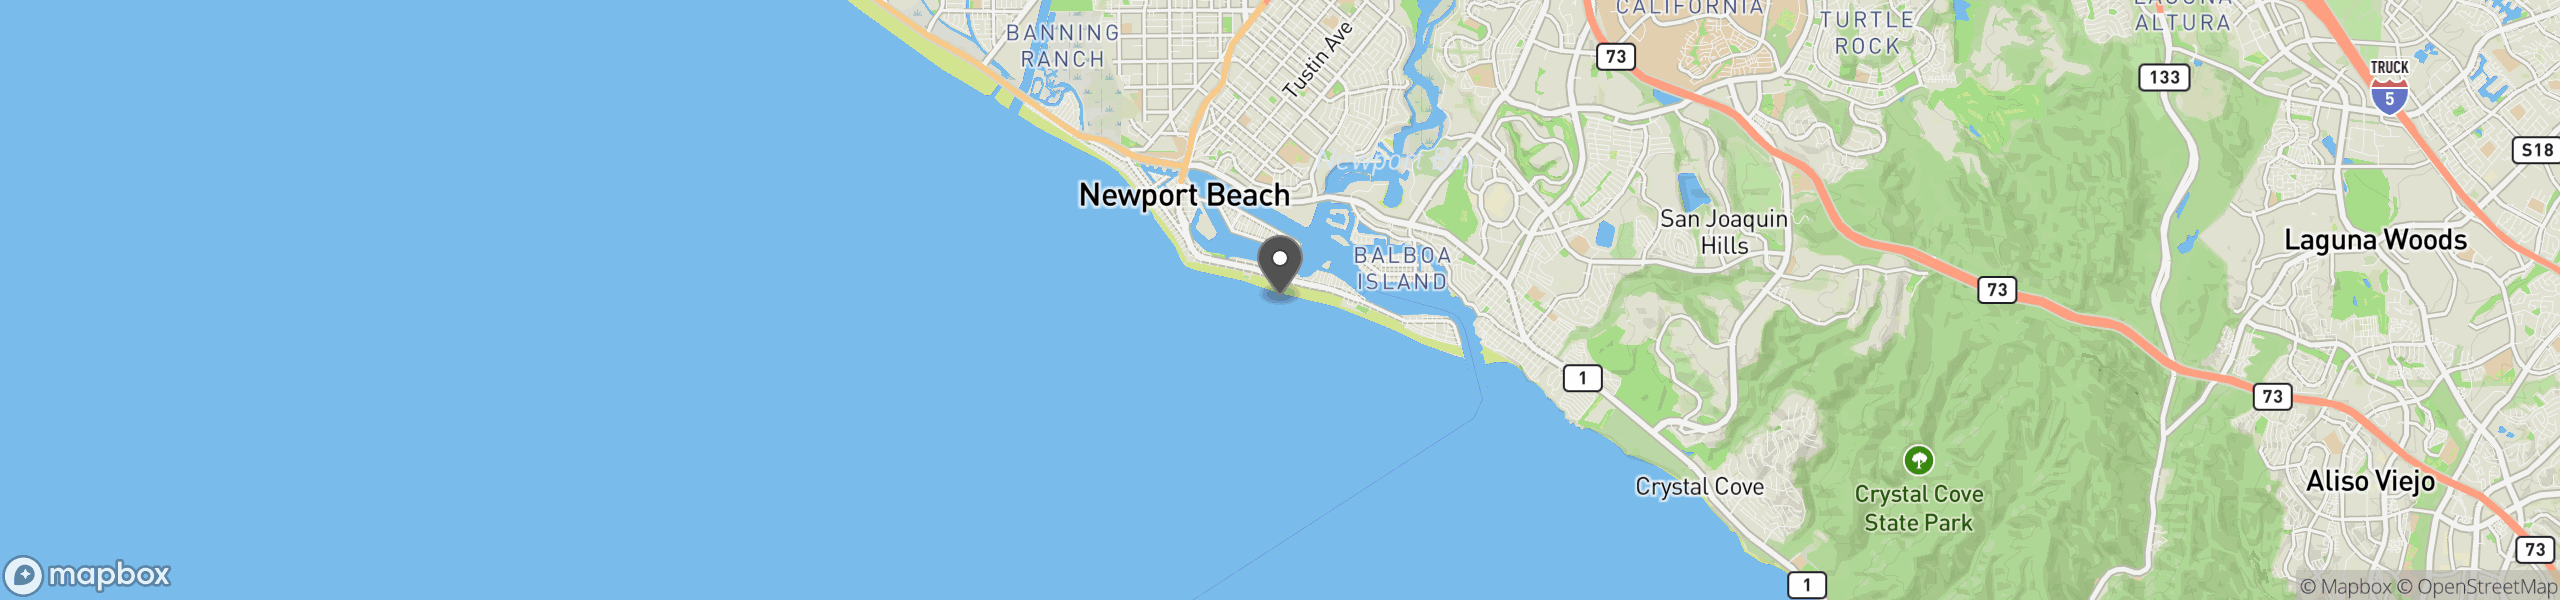 Newport Beach, CA 92661